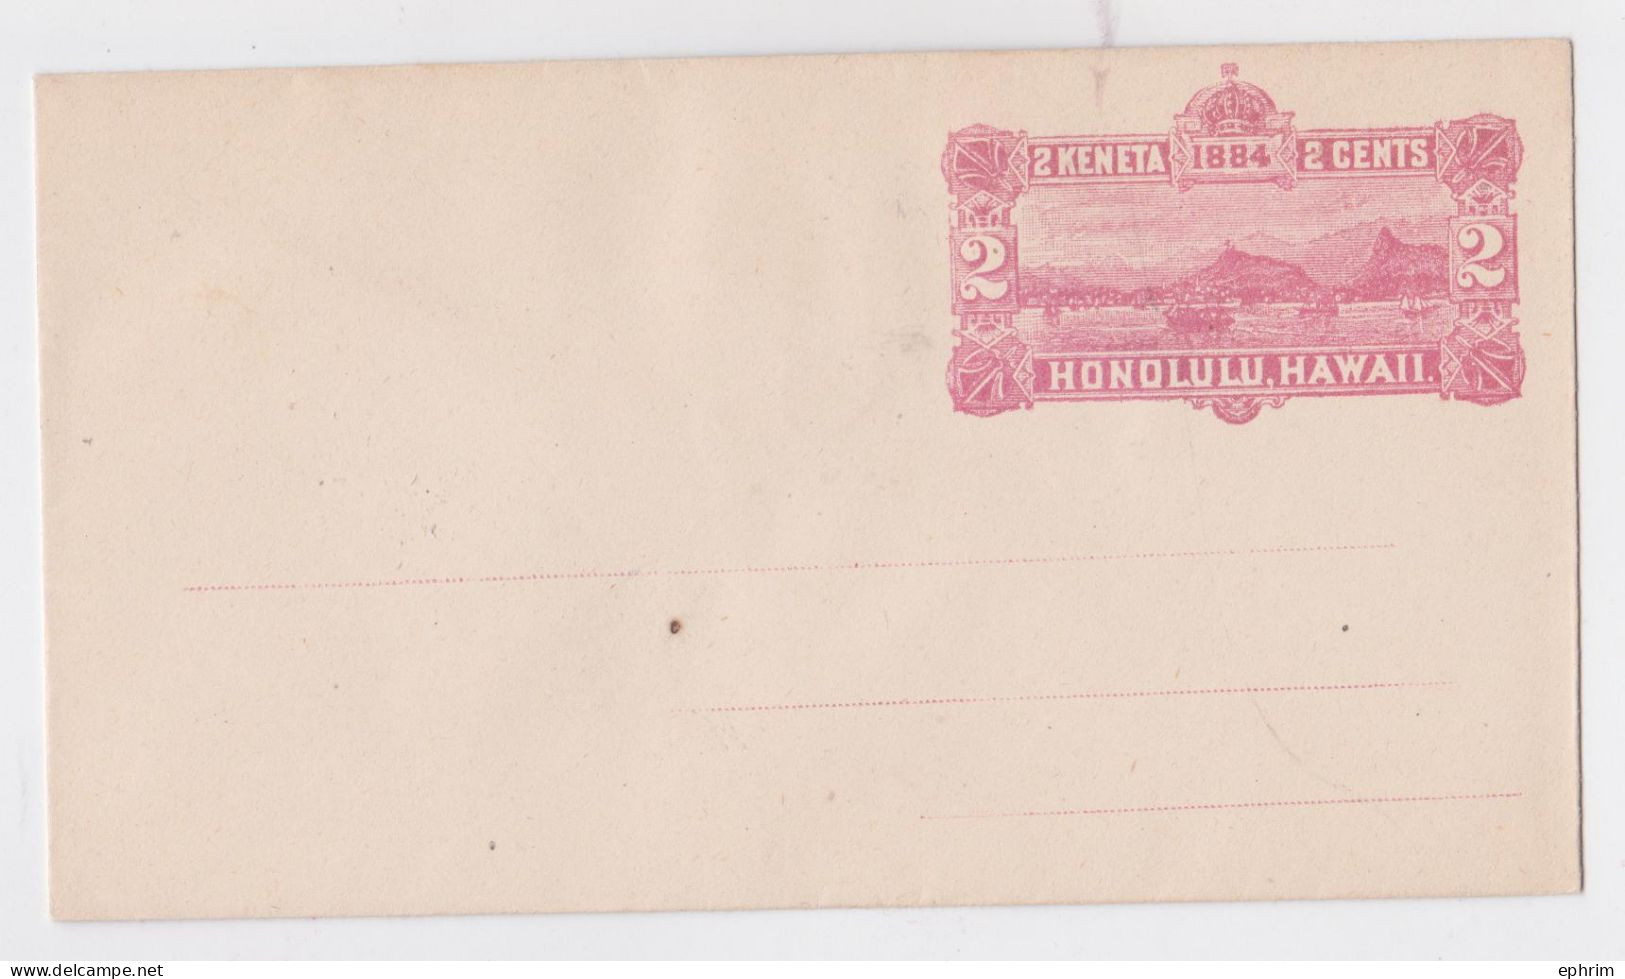 Honolulu Hawaii Hawaï Enveloppe Entier Postal Vierge Mint Postal Stationery Cover Letter Mail Red 2 Keneta Cents 1884 - Hawaï